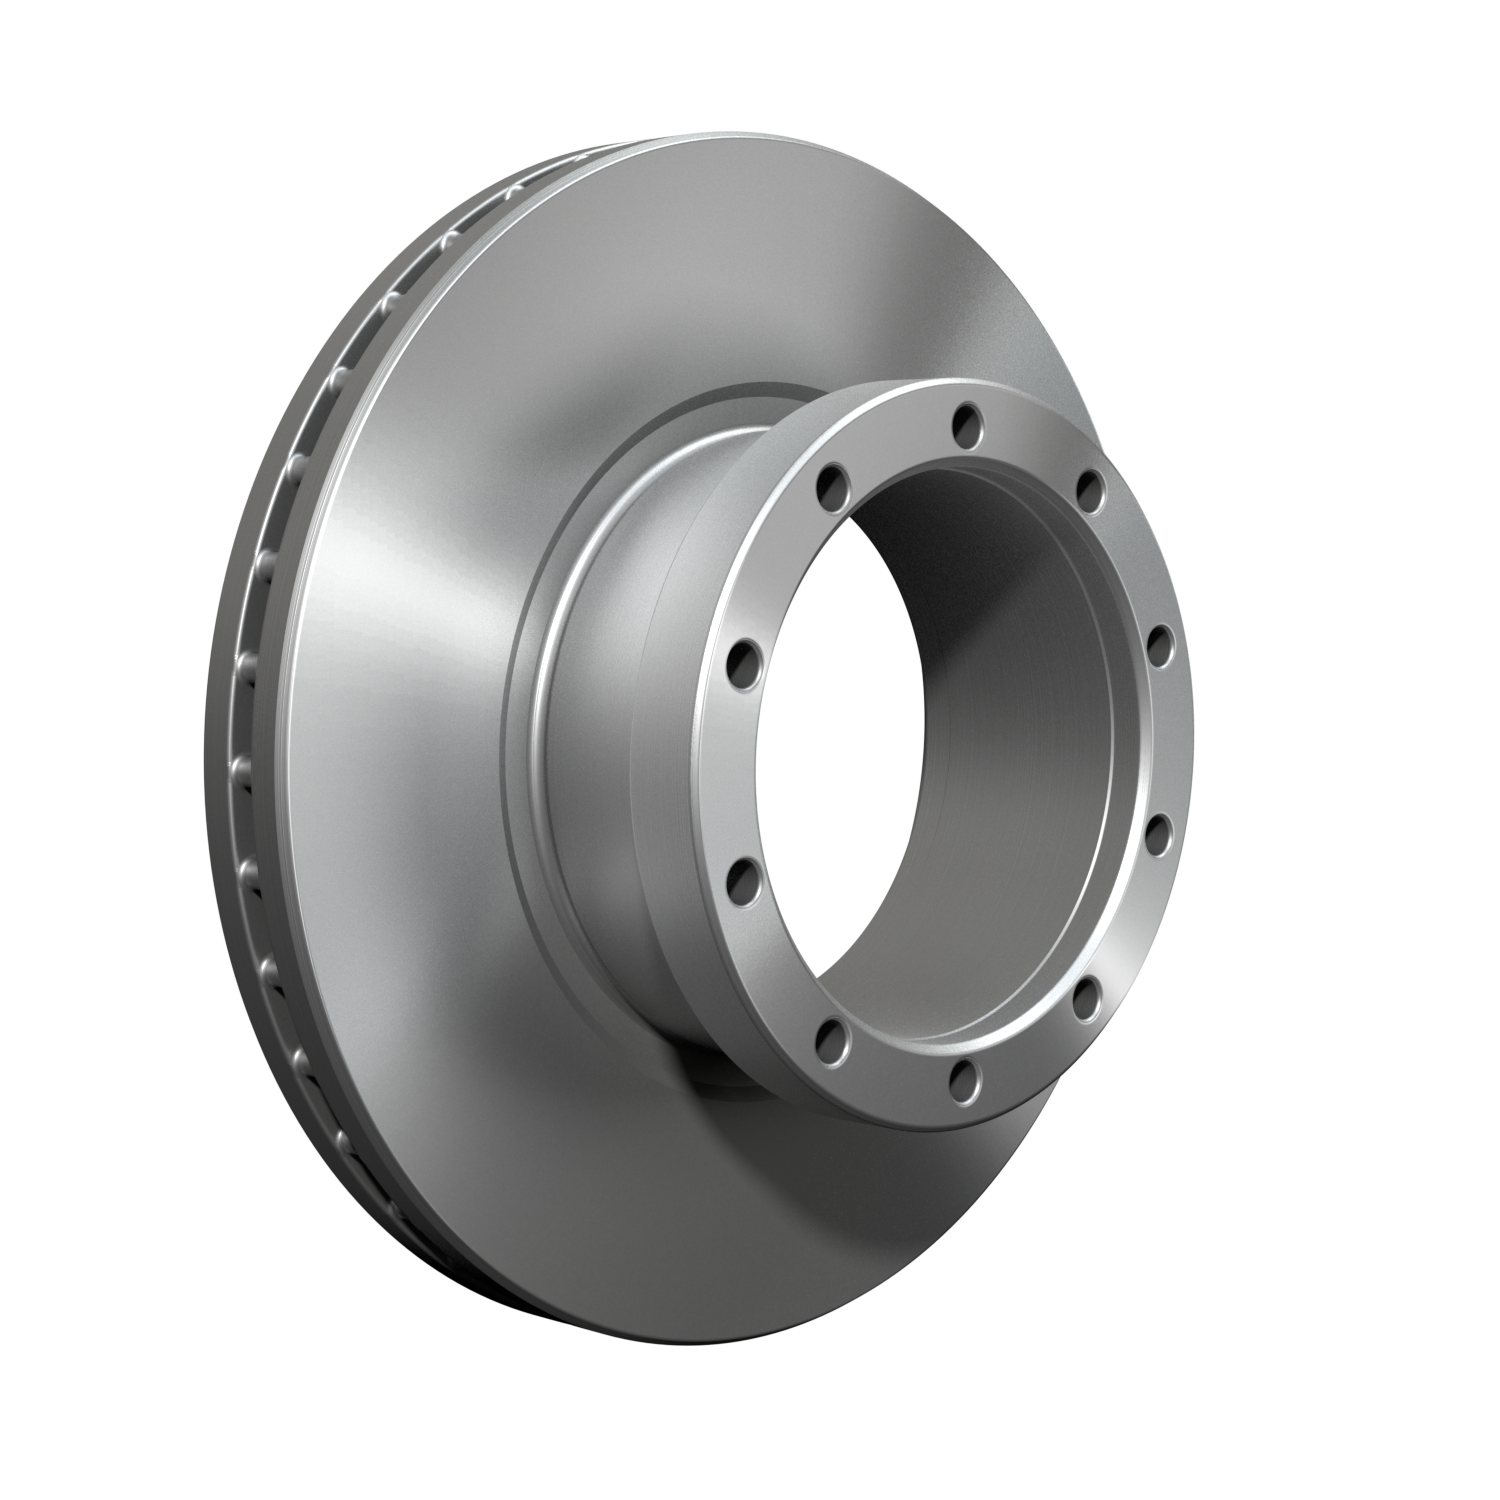 Meritor adds aftermarket air disc brake rotors - Truck News